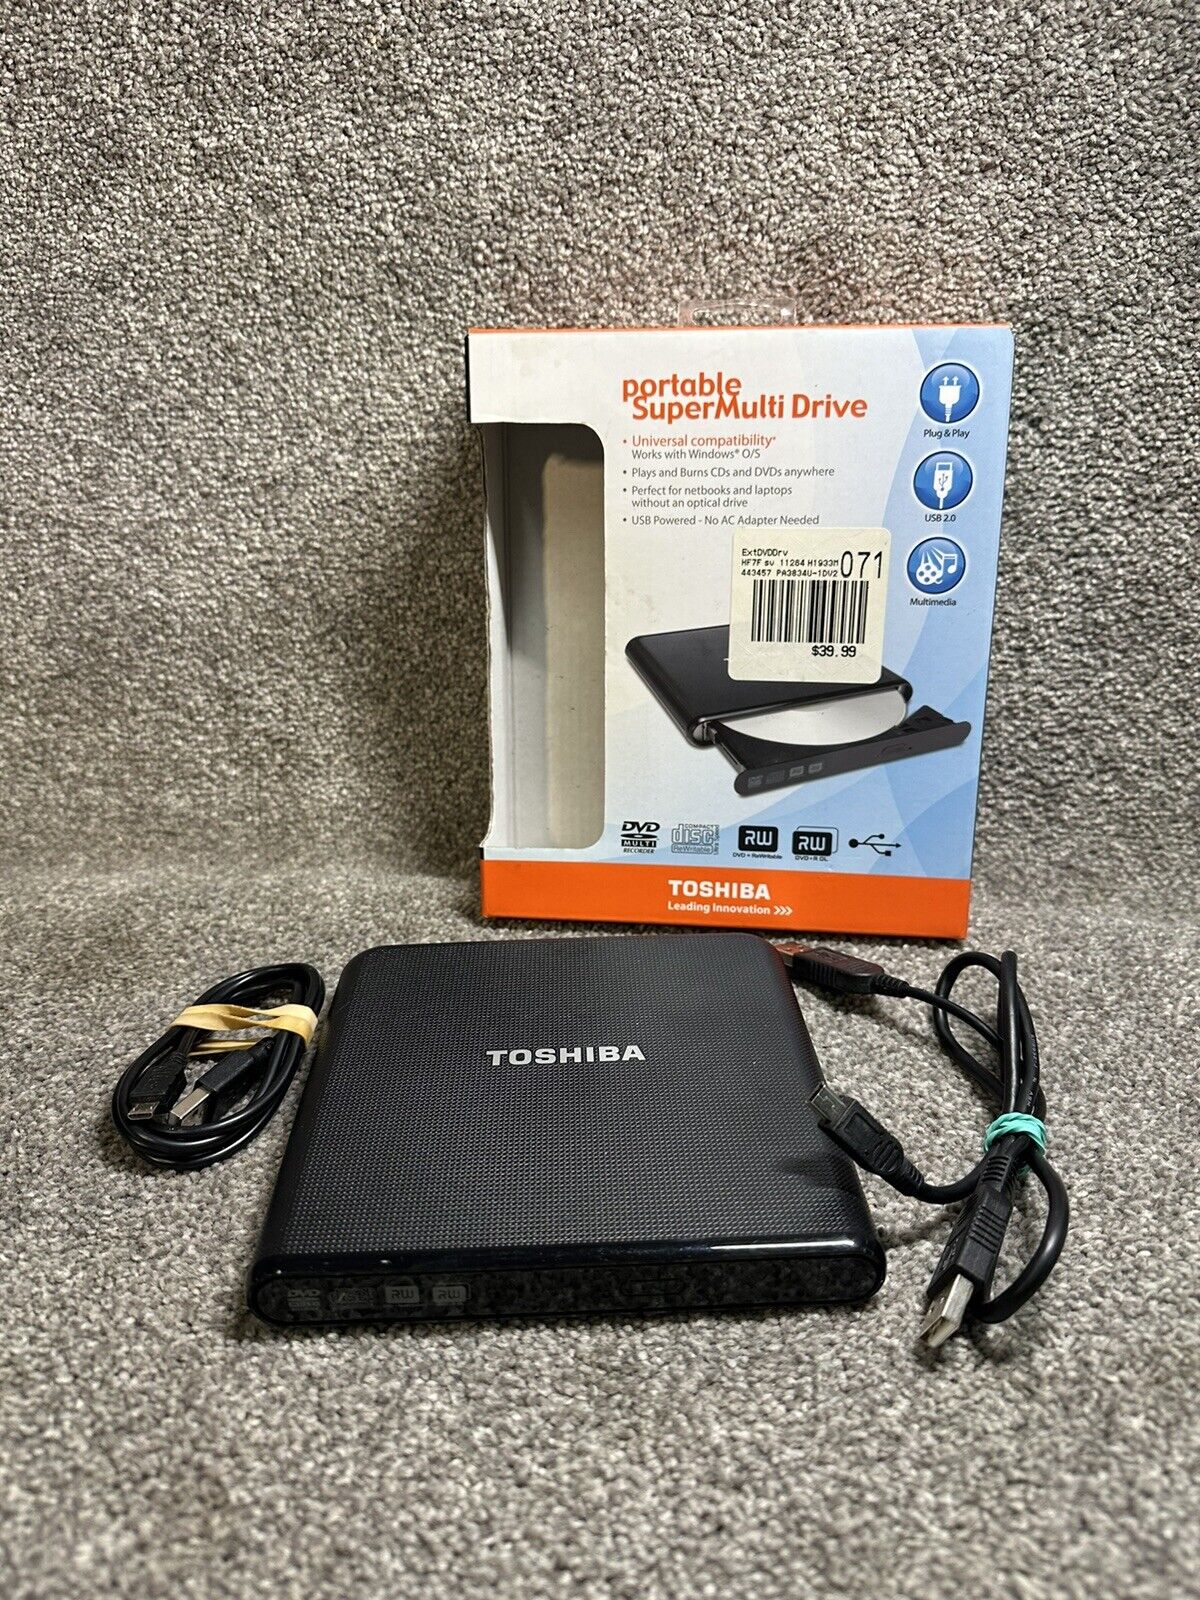 Toshiba Portable Supermulti Drive PA3761U-1DV2 External Supermulti Very Good